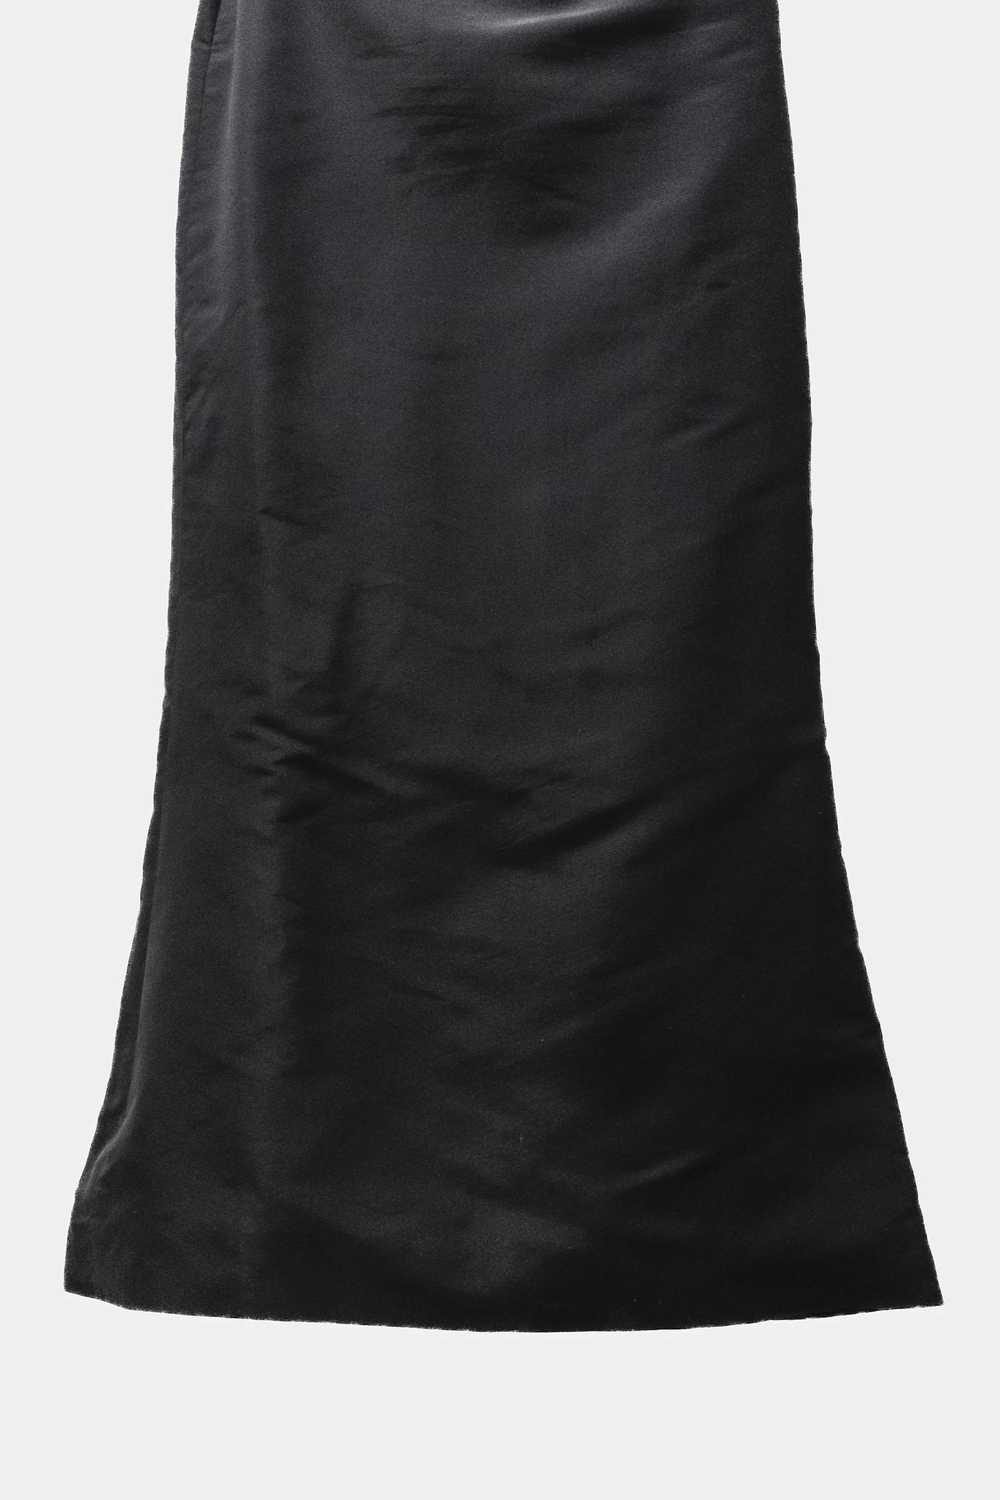 Designer Jacques Fath Black Silk Gown - image 7